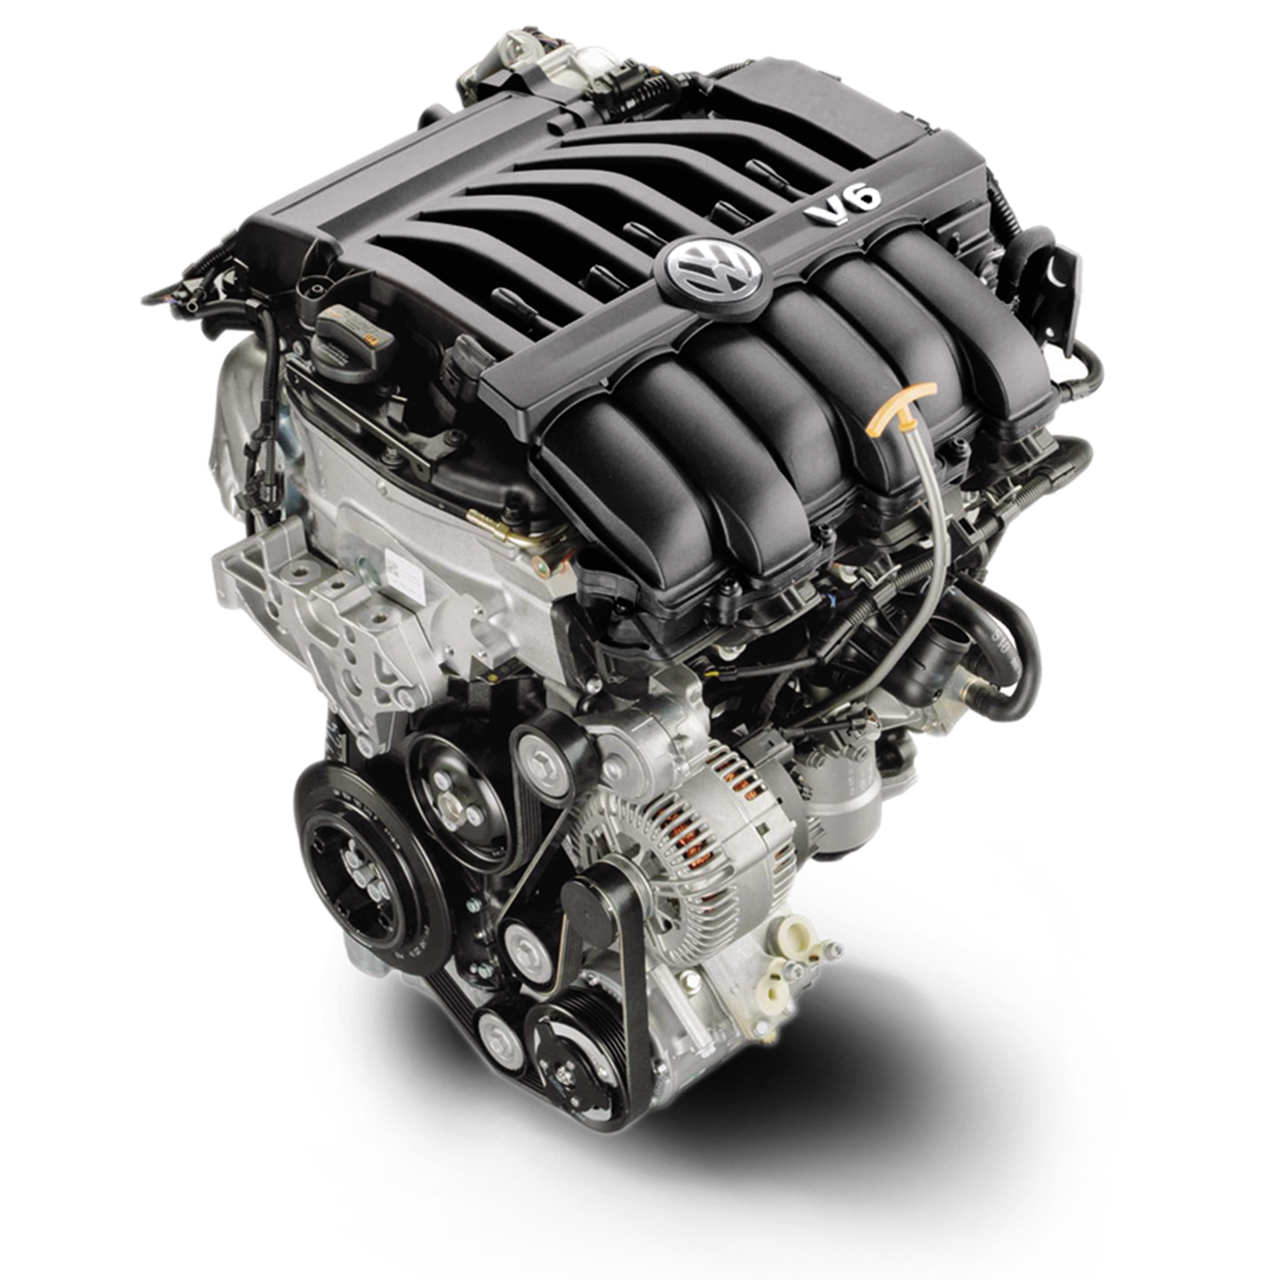 Двигатель VW Touareg 3.6 FSI. Двигатель vr6 3.2 Volkswagen. Двигатель вр6 Фольксваген Туарег. Volkswagen Passat мотор v6.